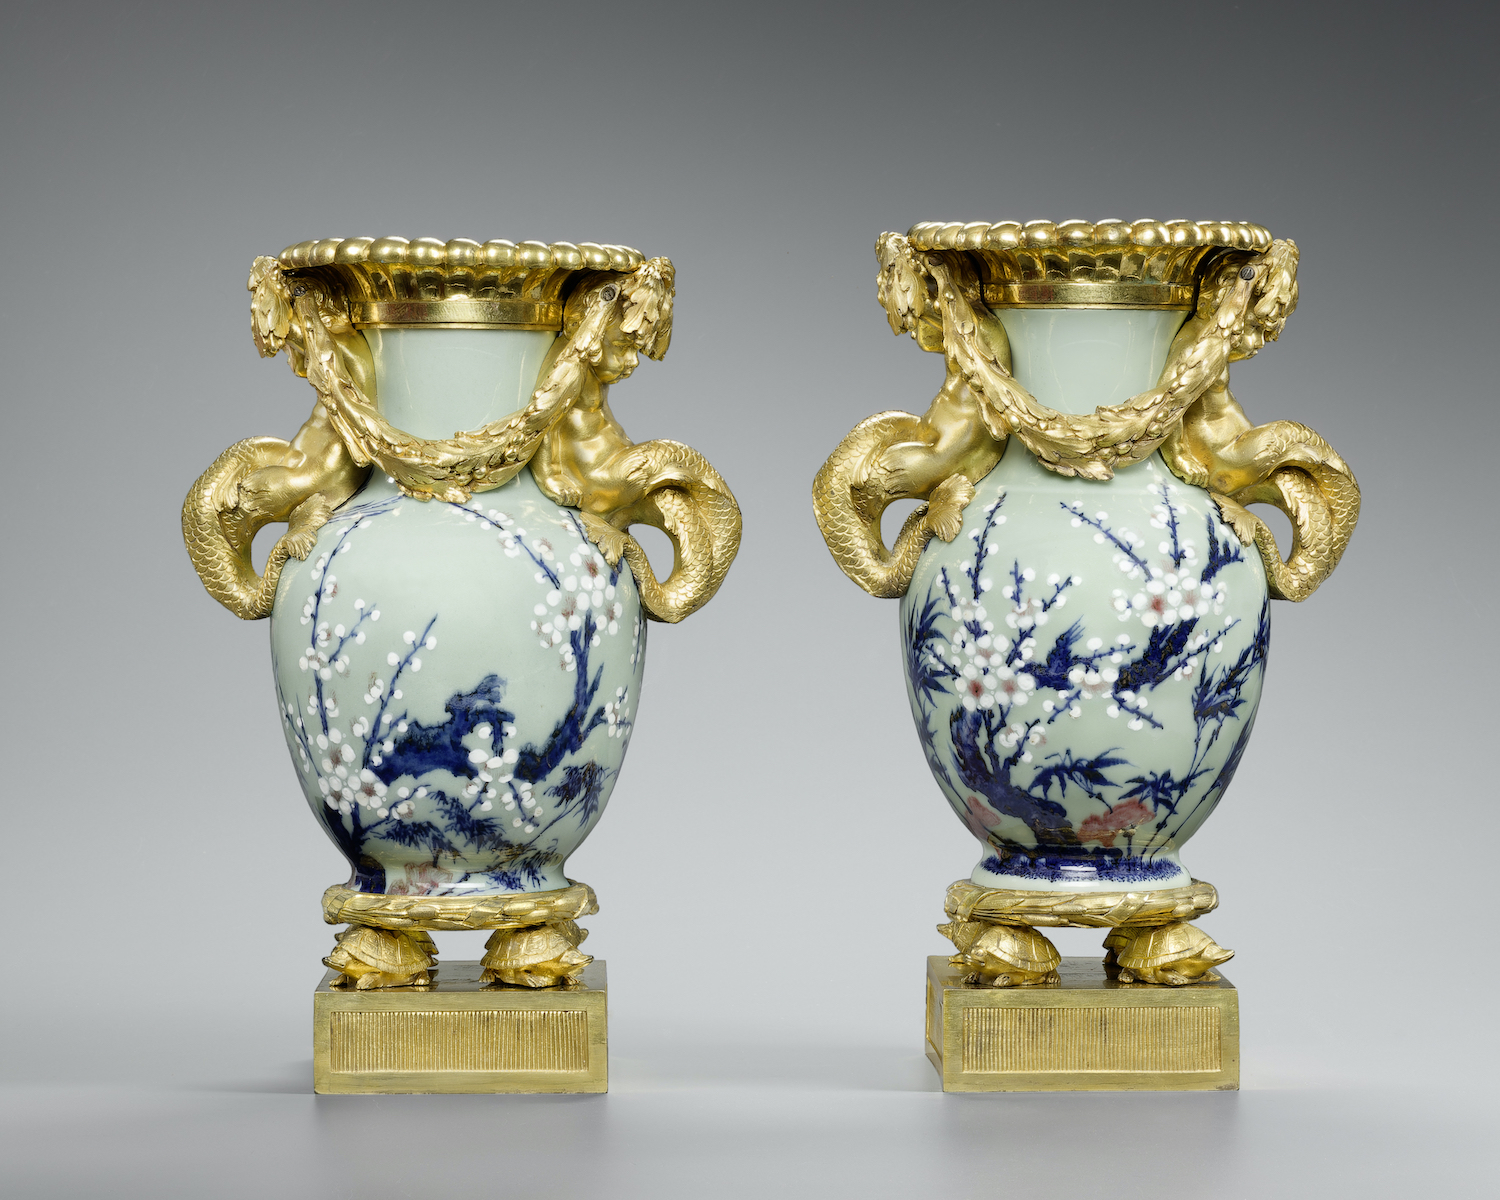 A very rare pair of late Louis XV celadon fleuri porcelain vases aux enfants tritons from the collection of the Duc de Chaulnes